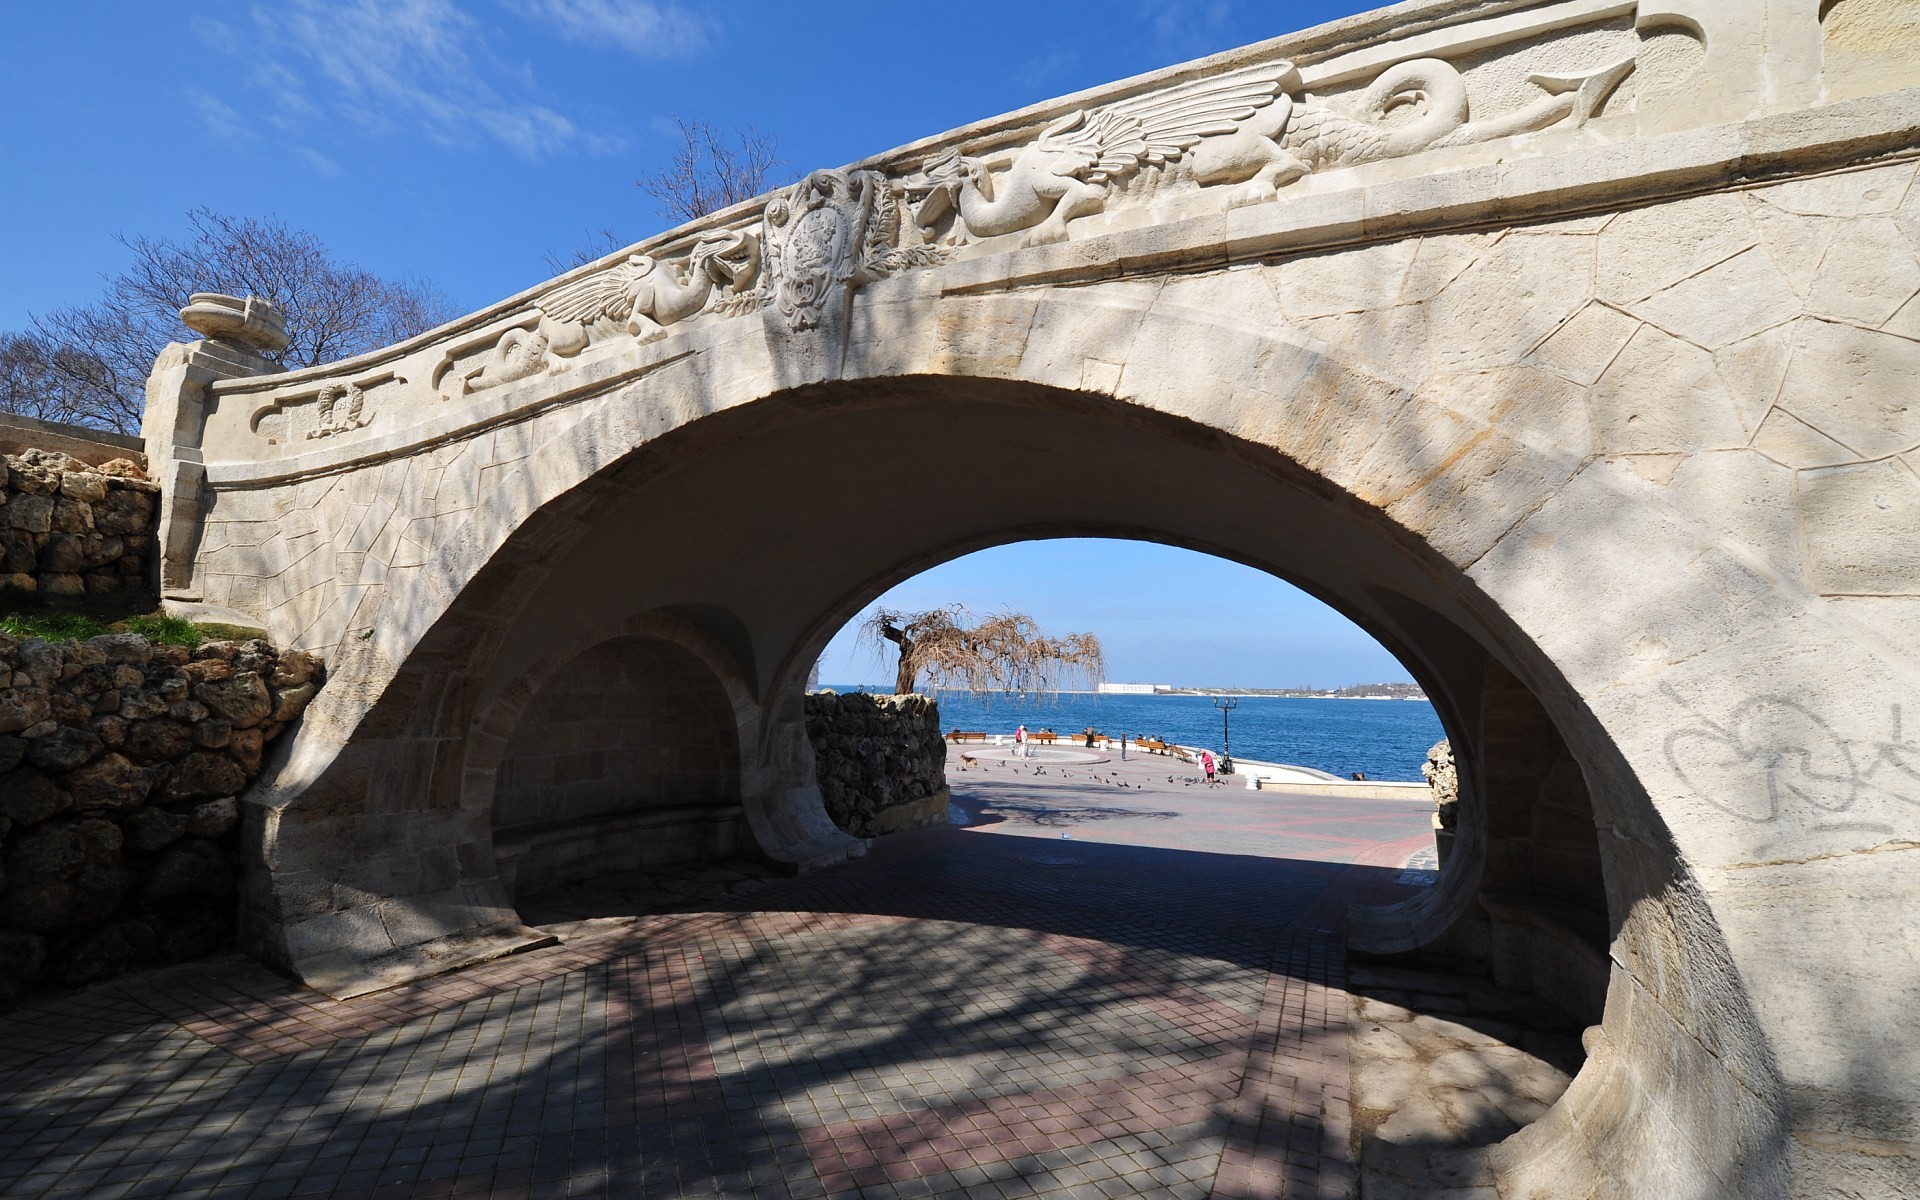 Bridge of lovers or Dragon Bridge, Sevastopol in the Crimea on the shores of the Black Sea